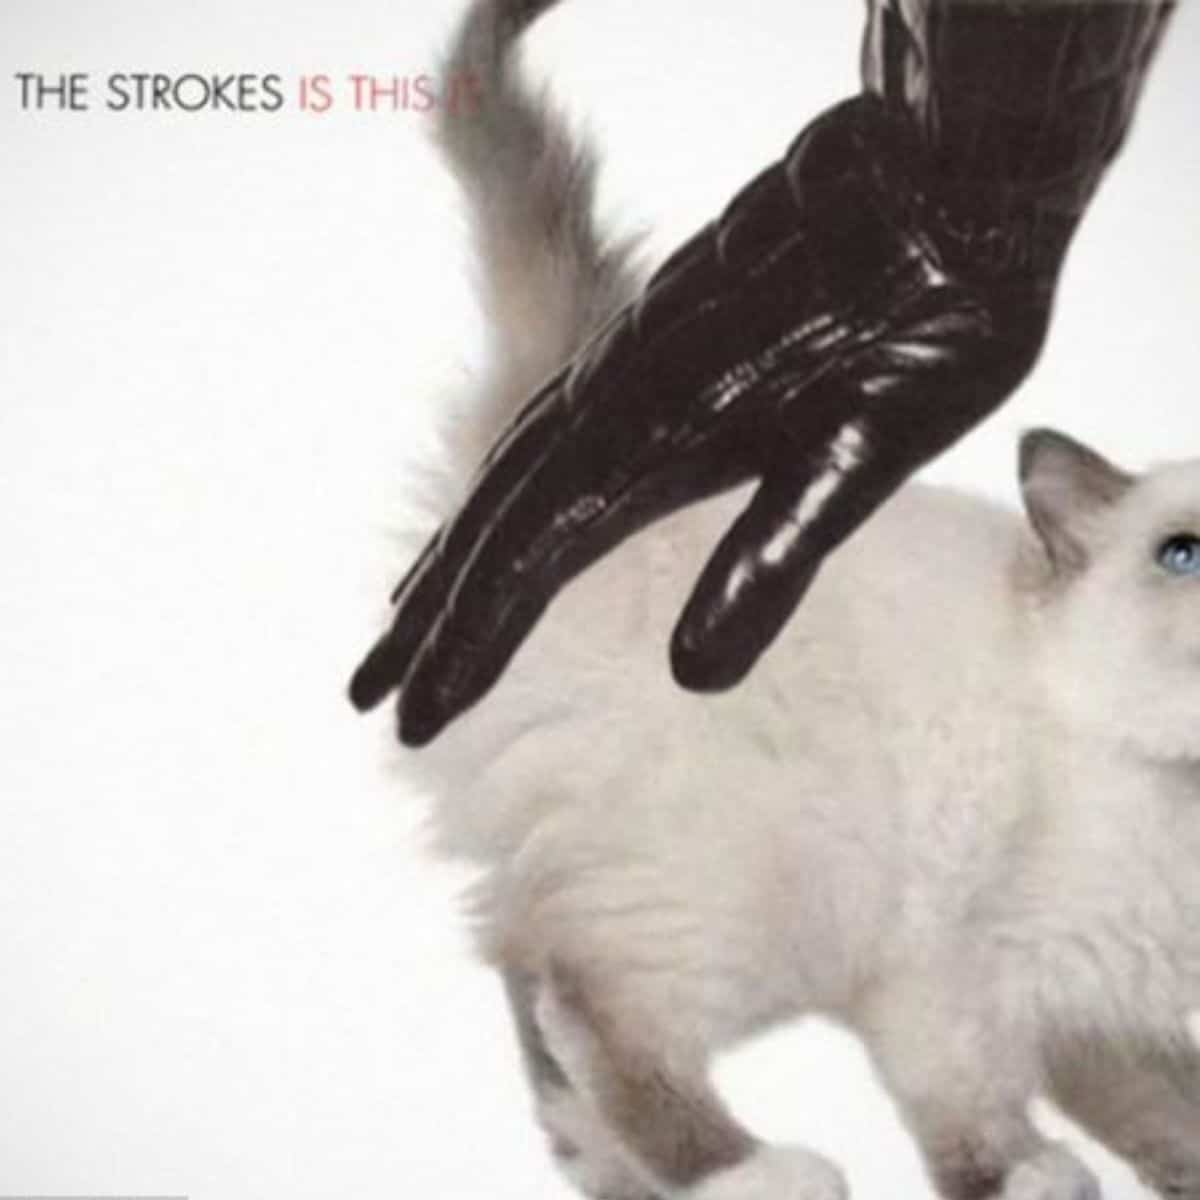 cat version of the strokes' album cover